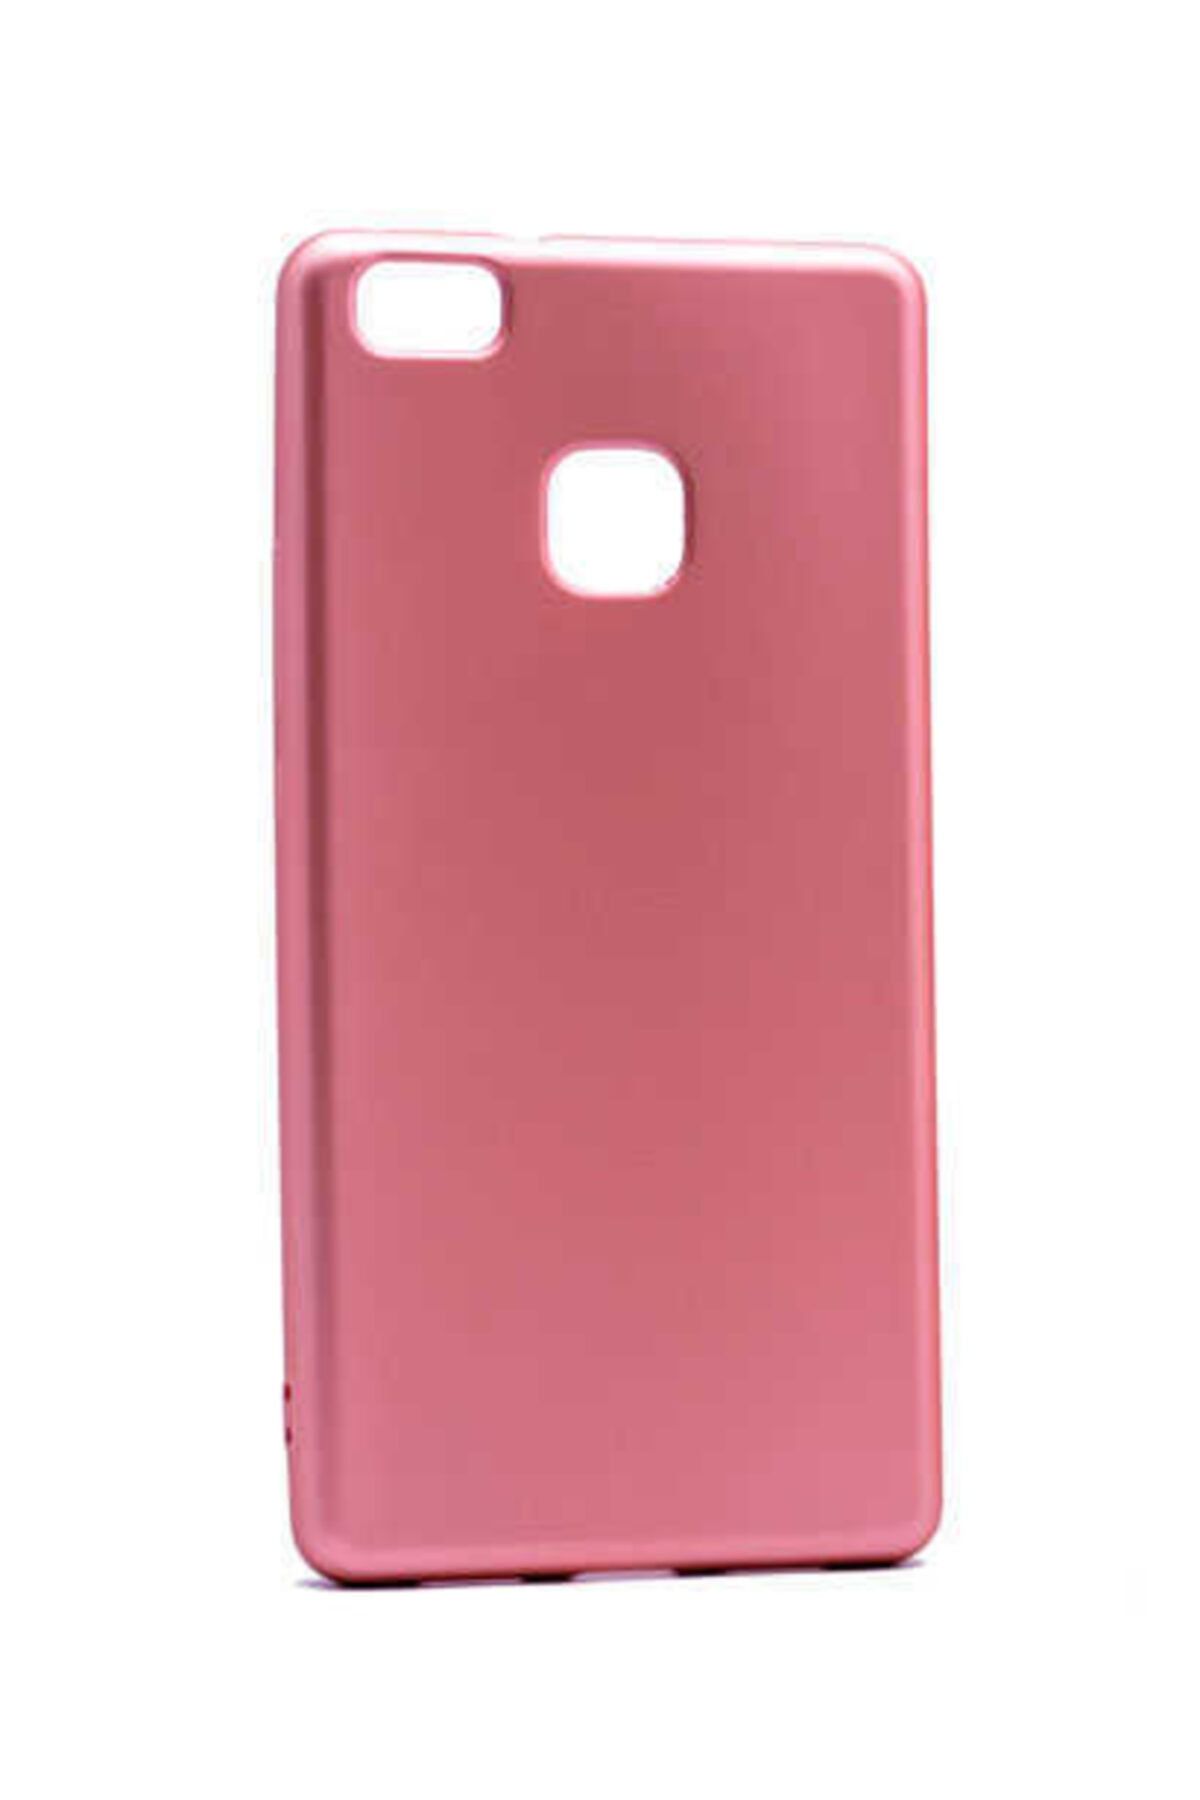 İncisoft Huawei P9 Lite Uyumlu Ince Yumuşak Soft Tasarım Renkli Silikon Kılıf